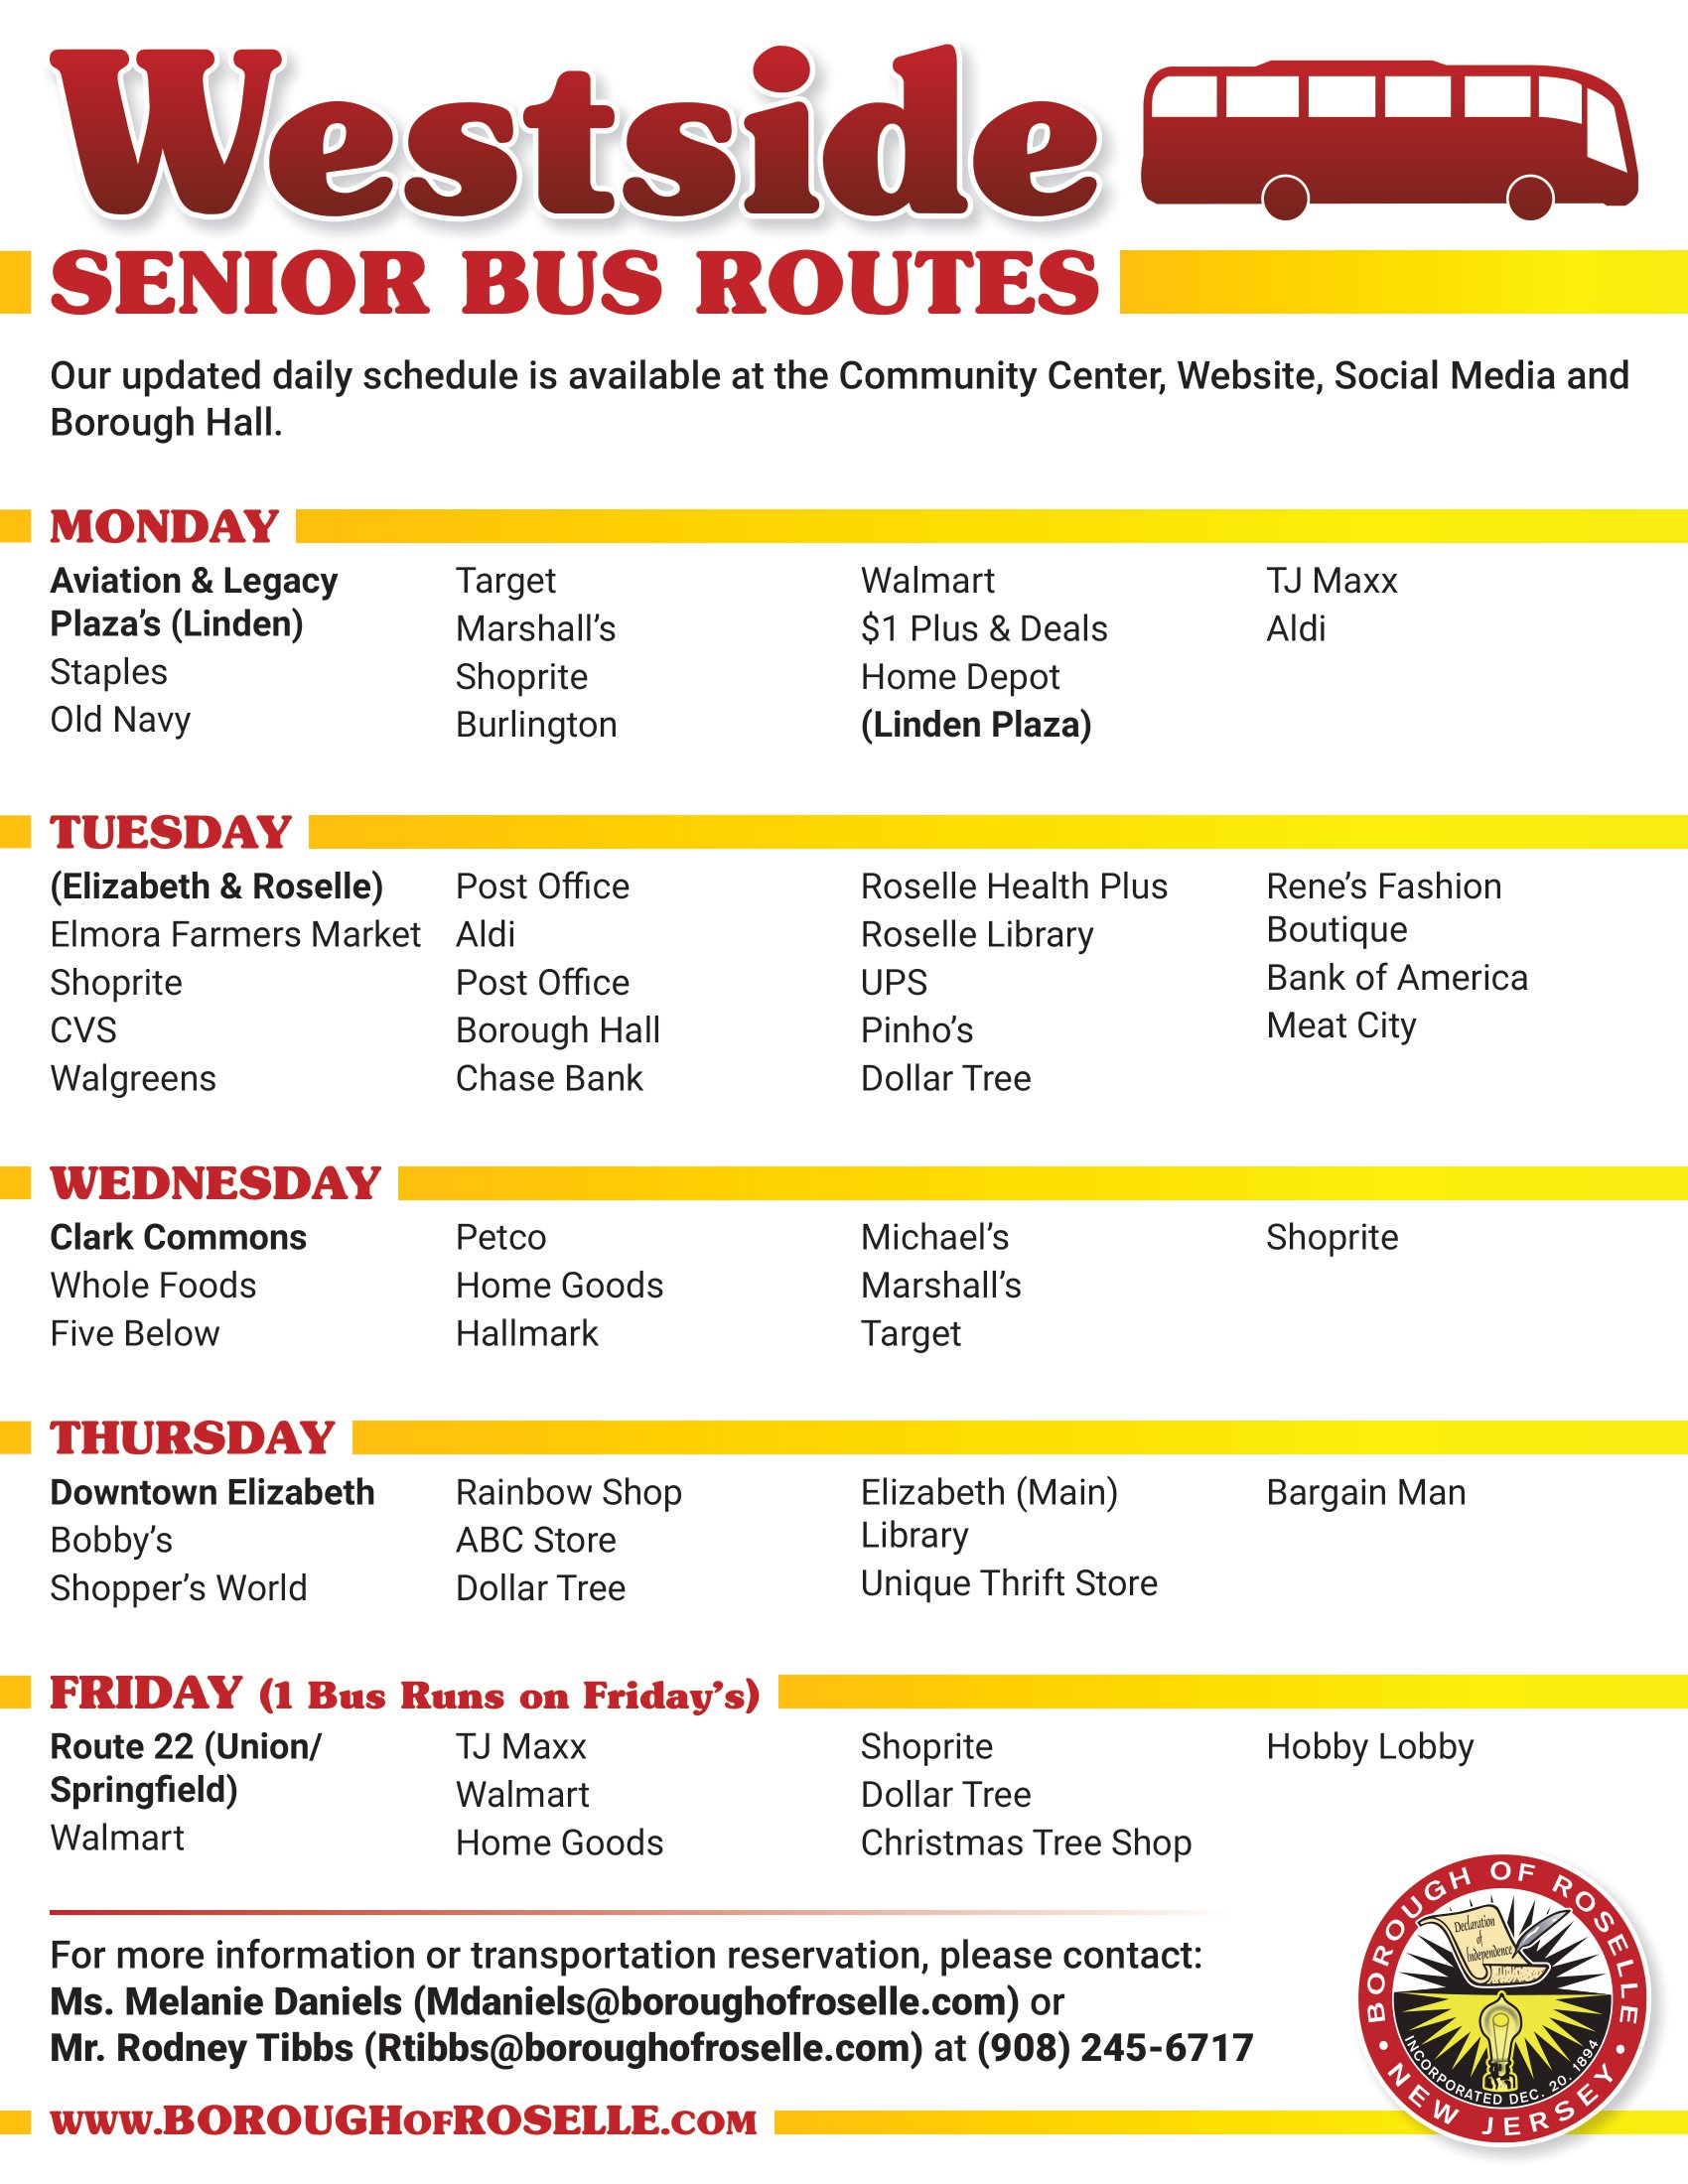 Roselle Senior Bus Routes flyer WEST v1